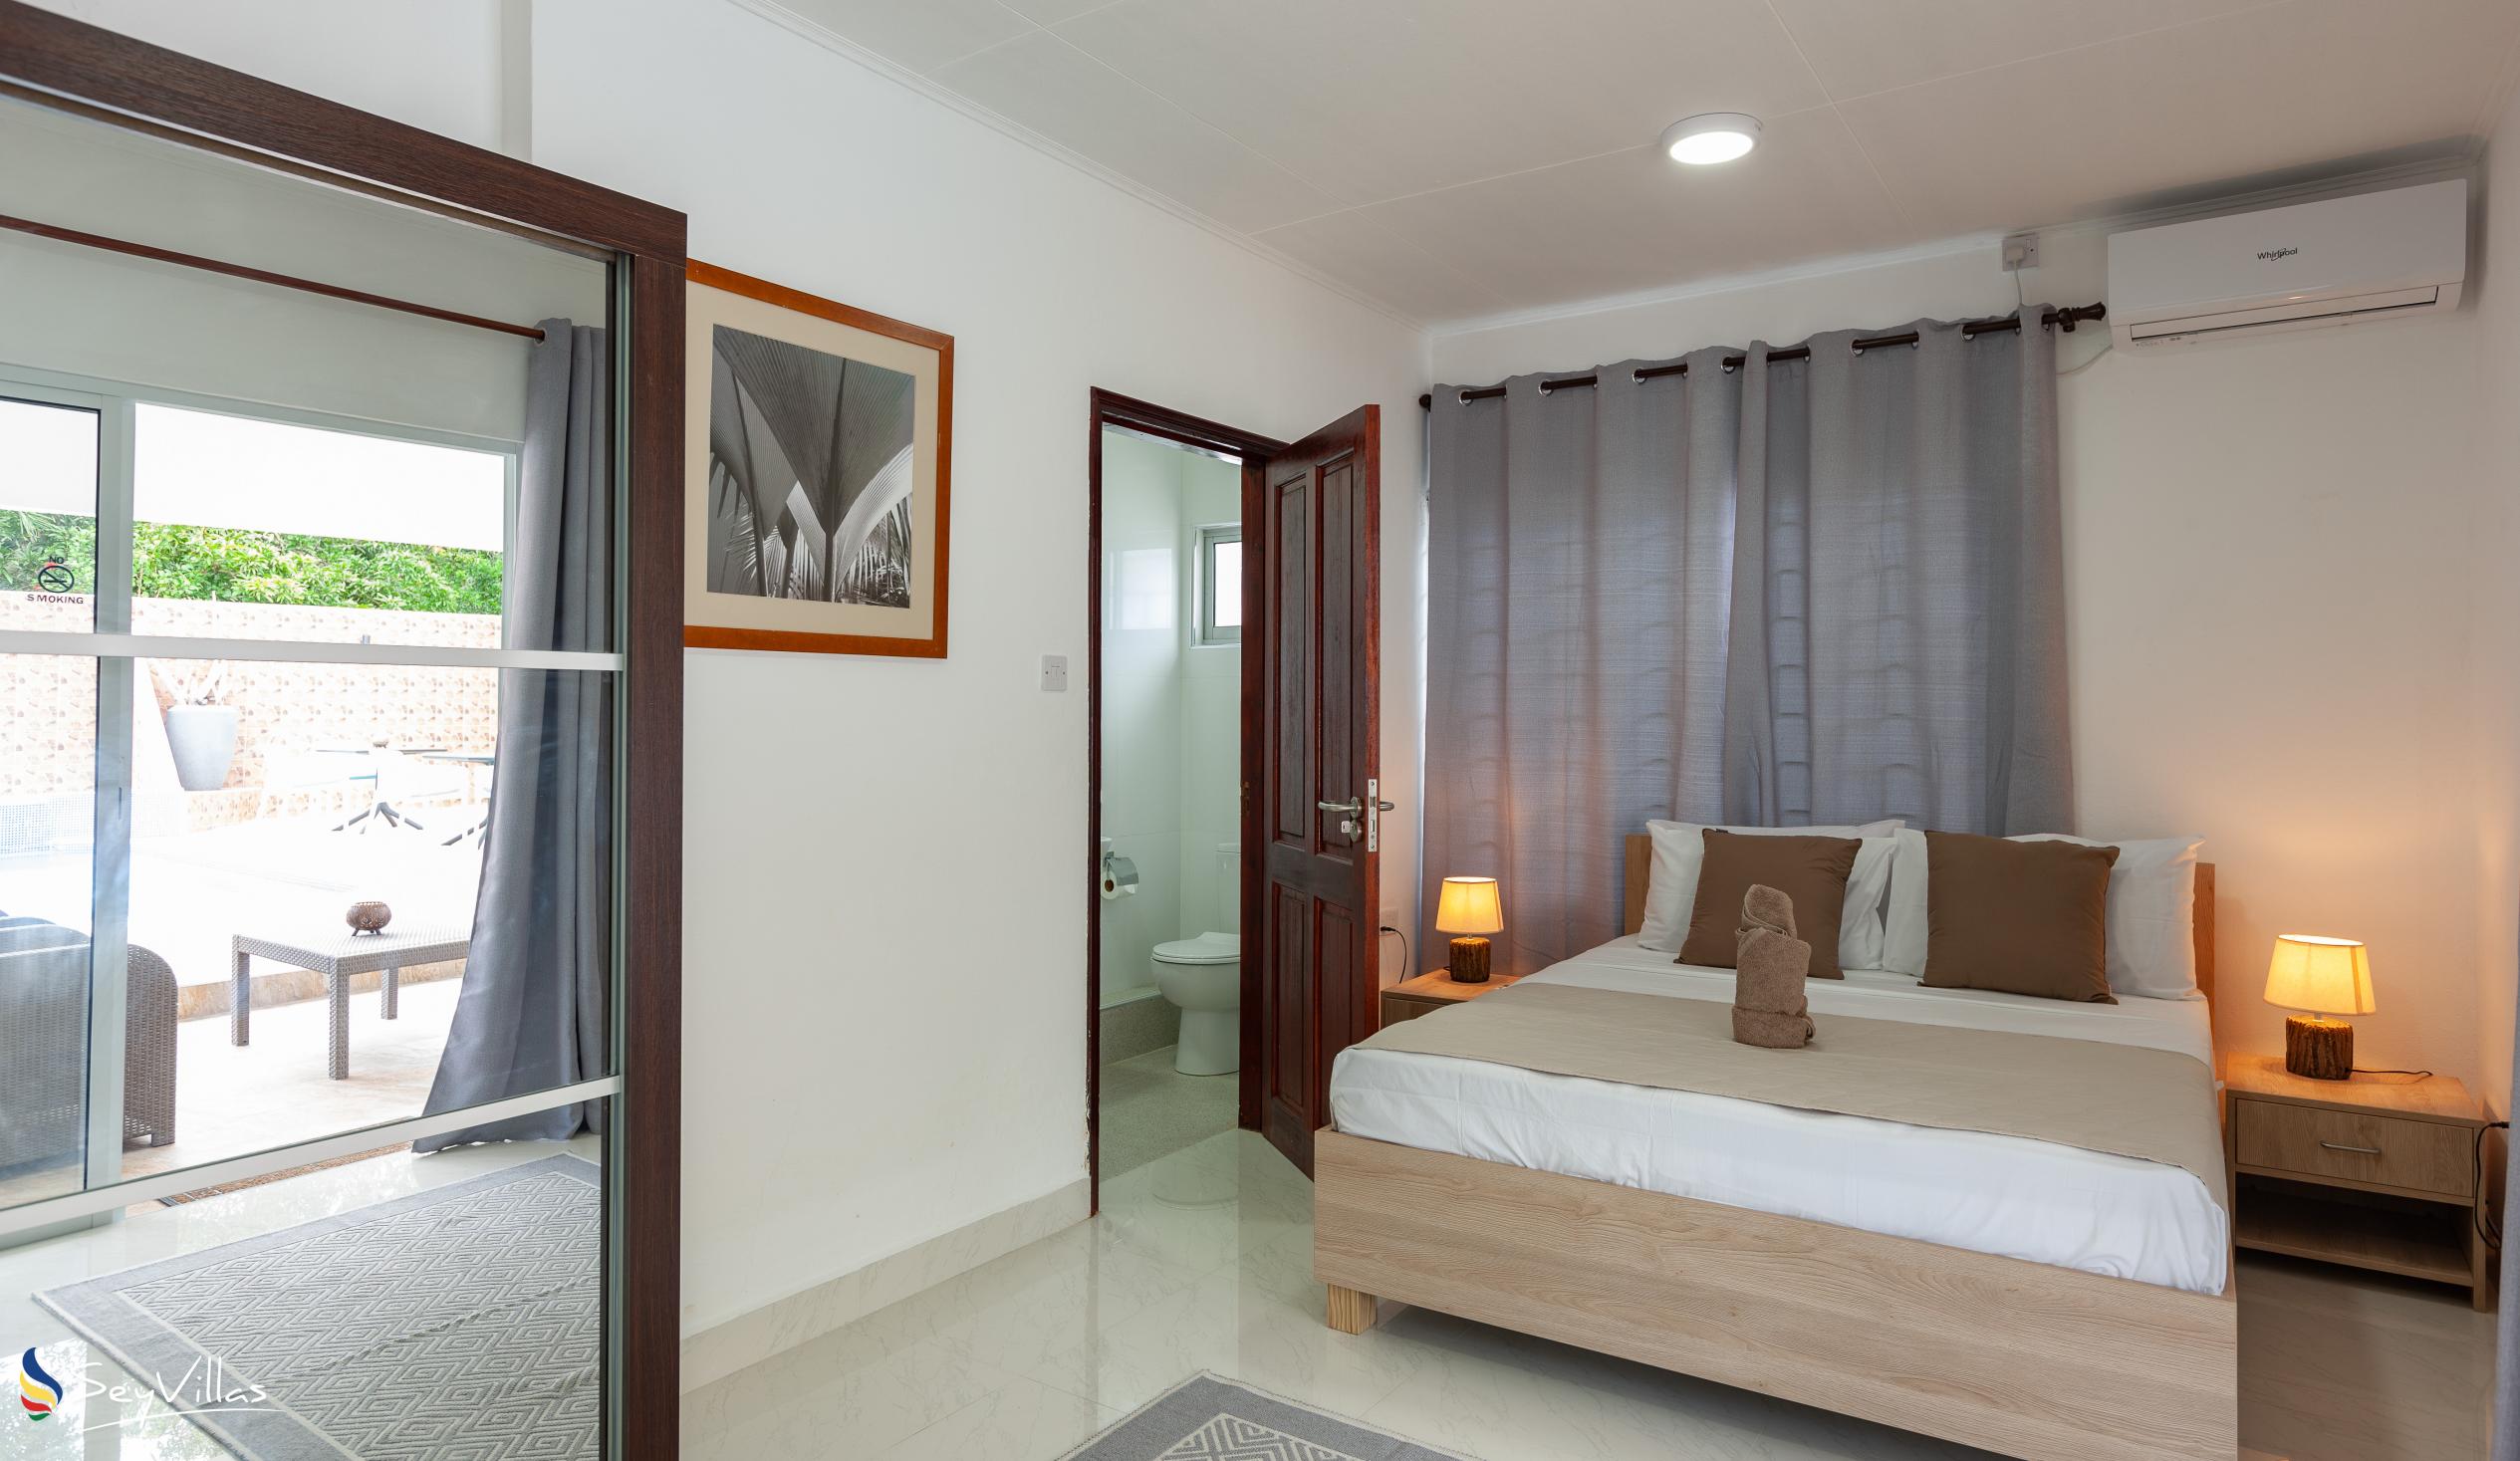 Foto 30: Hotel Plein Soleil - Camera Deluxe con letto queensize - Praslin (Seychelles)